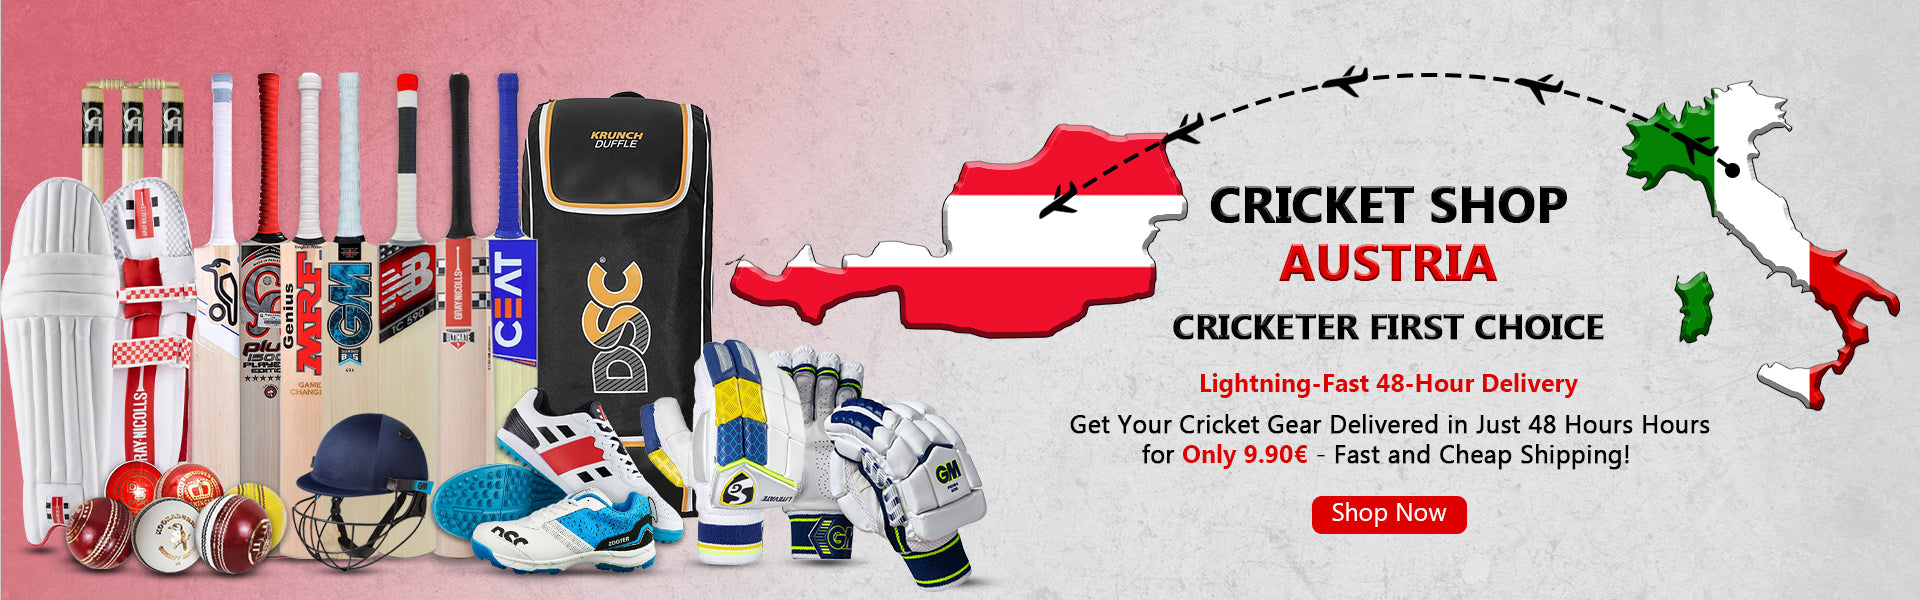 Cricket Shop Austria | Cricketer first Choice